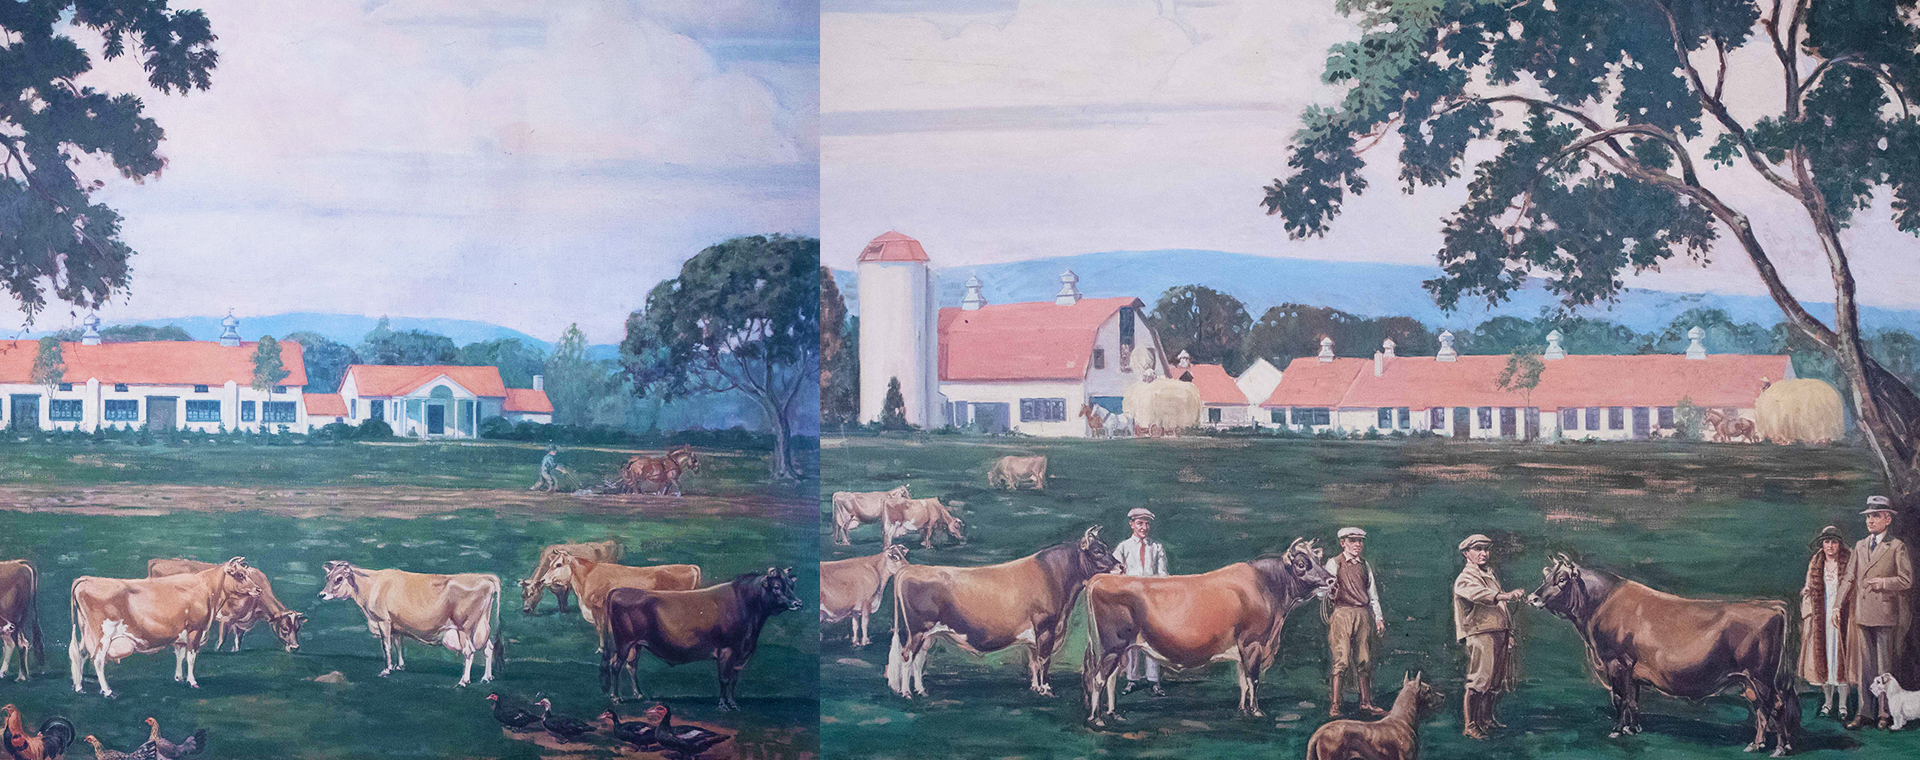 Views and Vistas: Edwin Megargee’s Twin Oaks Farm Mural